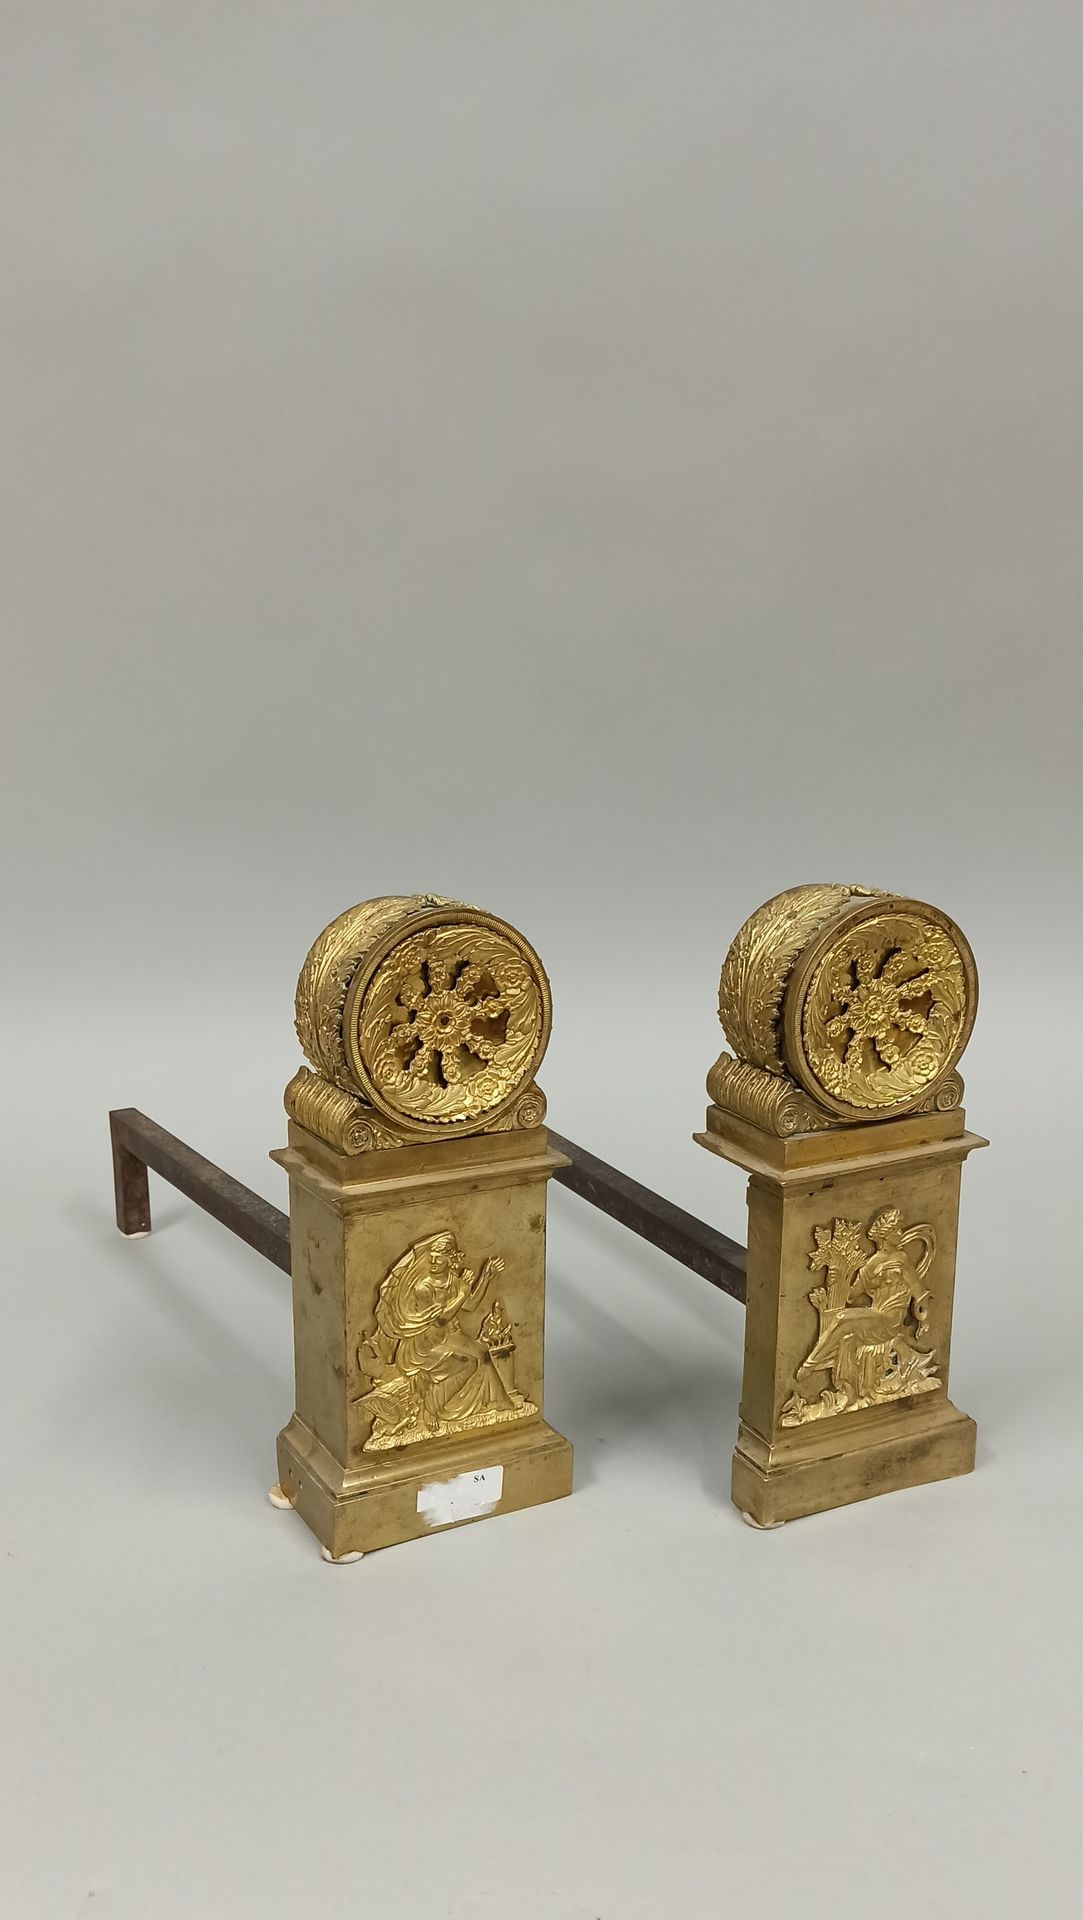 Null 一对鎏金铜制和带凹槽的护目镜，上面有冬夏两季的贴花图案。

19世纪上半叶的作品

高度：25厘米